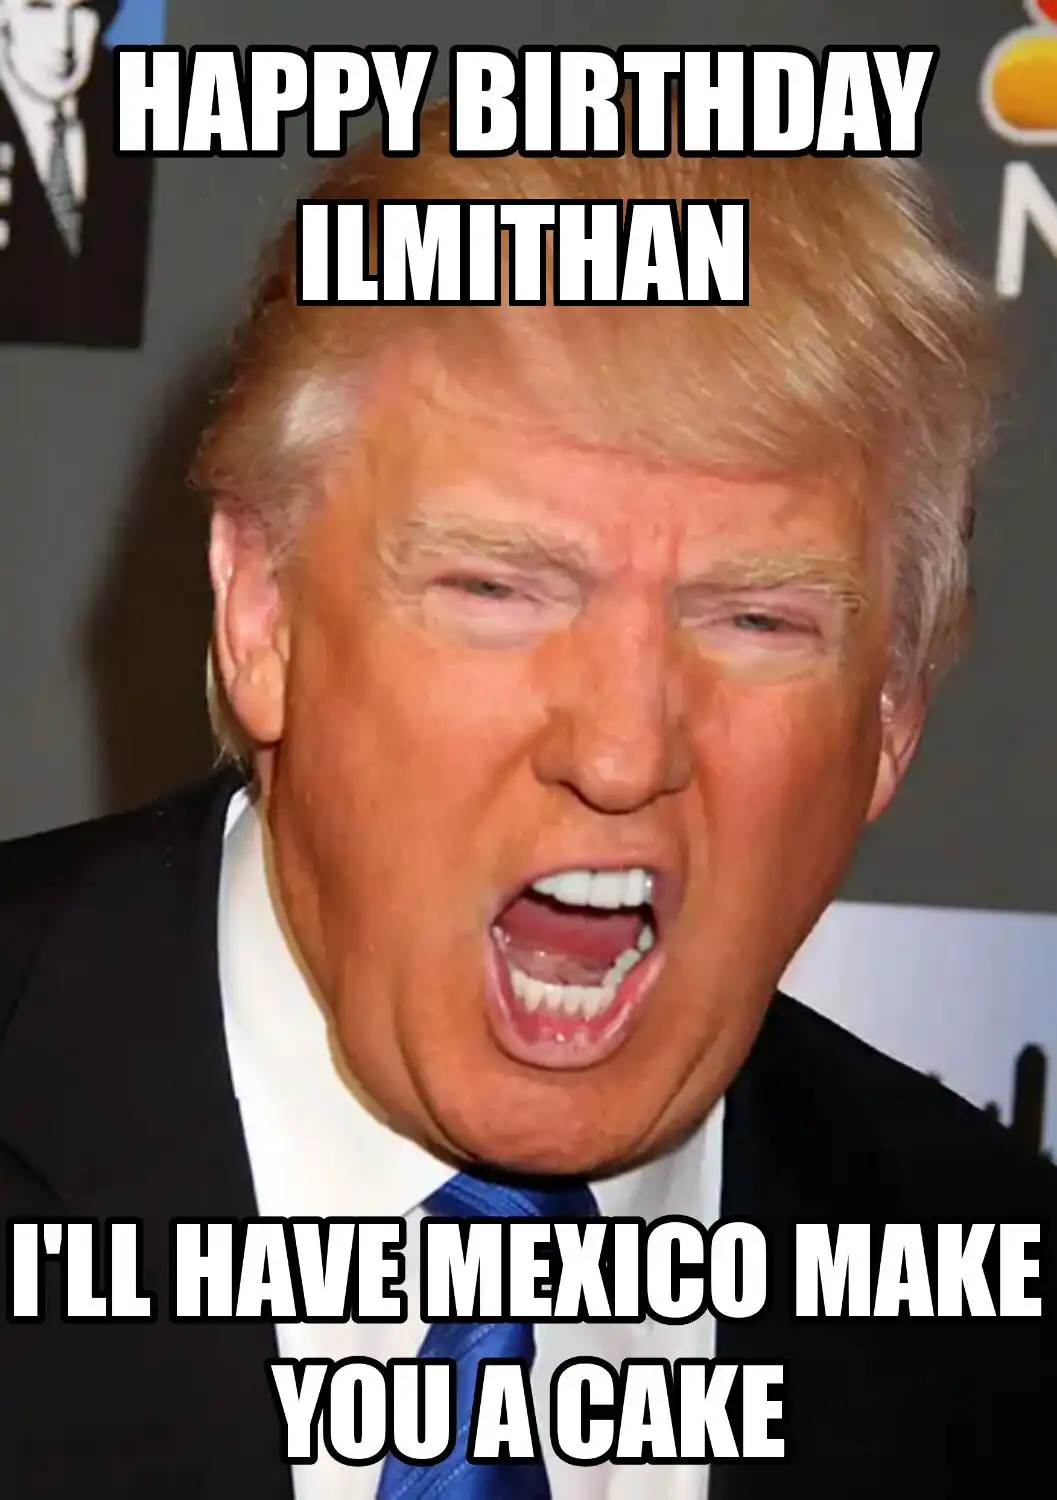 Happy Birthday Ilmithan Mexico Make You A Cake Meme